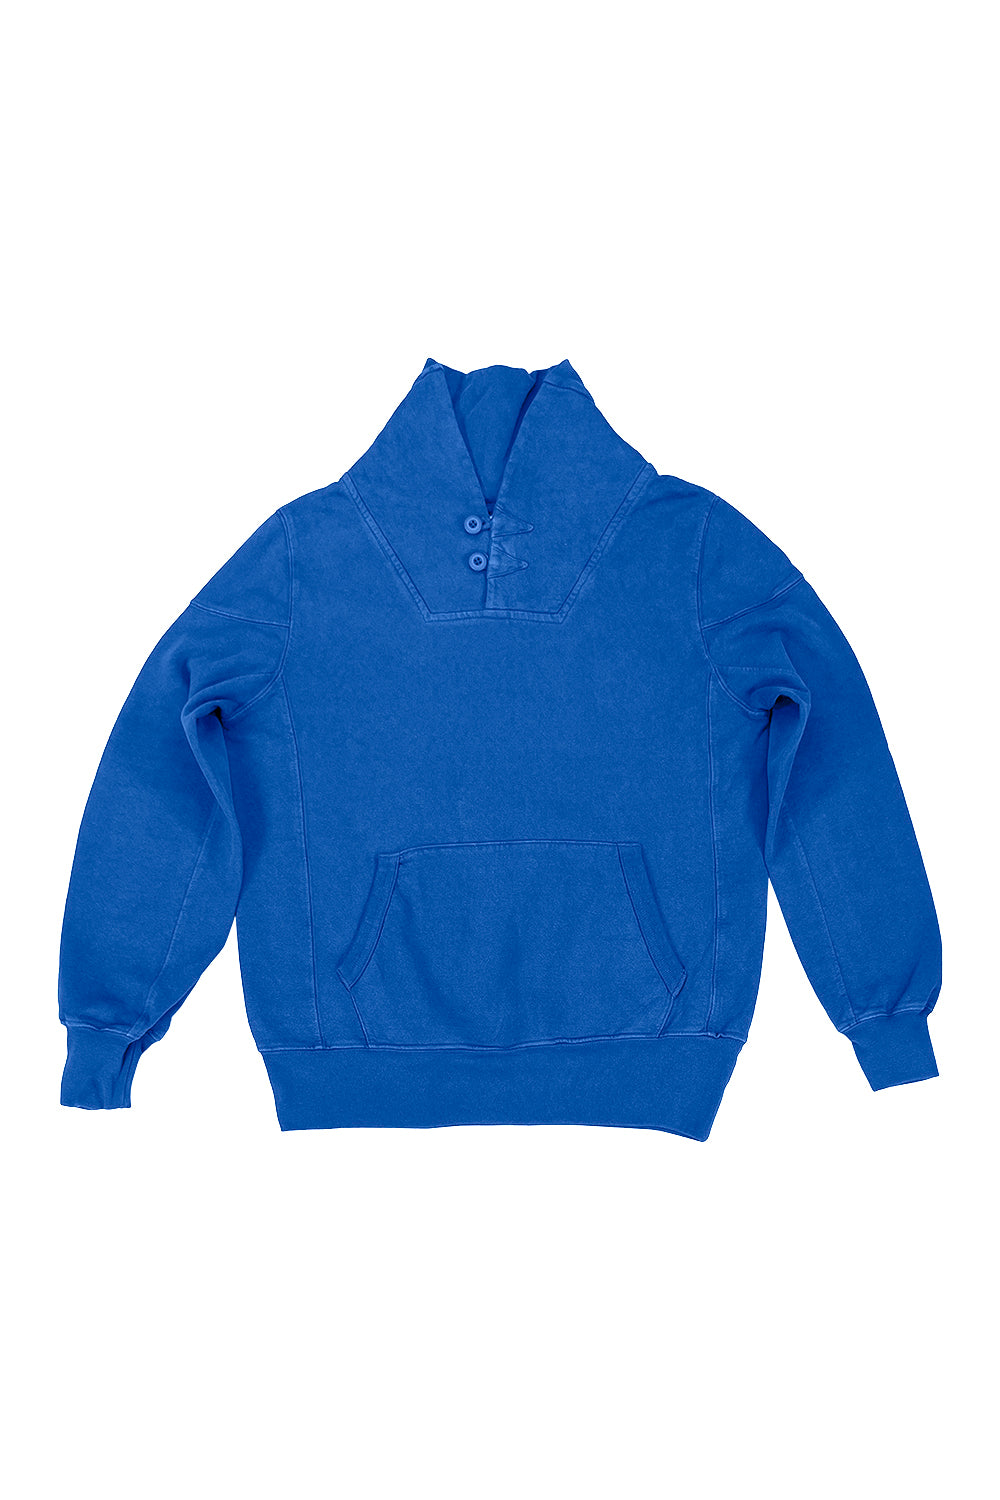 Whittier Sweatshirt | Jungmaven Hemp Clothing & Accessories / Color: Galaxy Blue